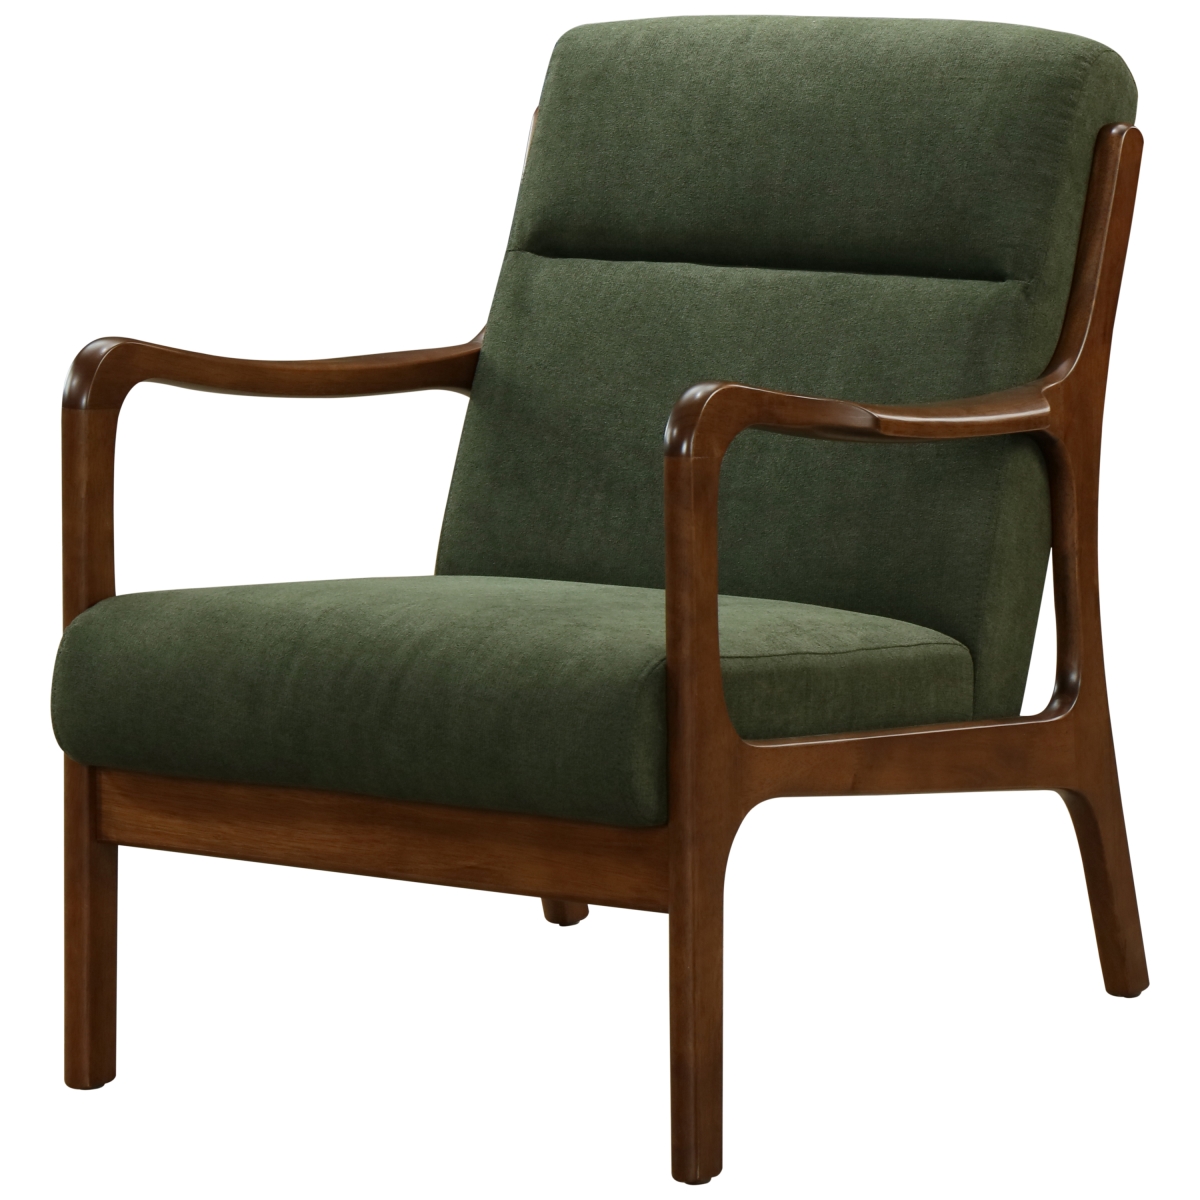 1320004-504 31.50 X 32 X 15 In. Anton Arm Chair, Studio Dark Green